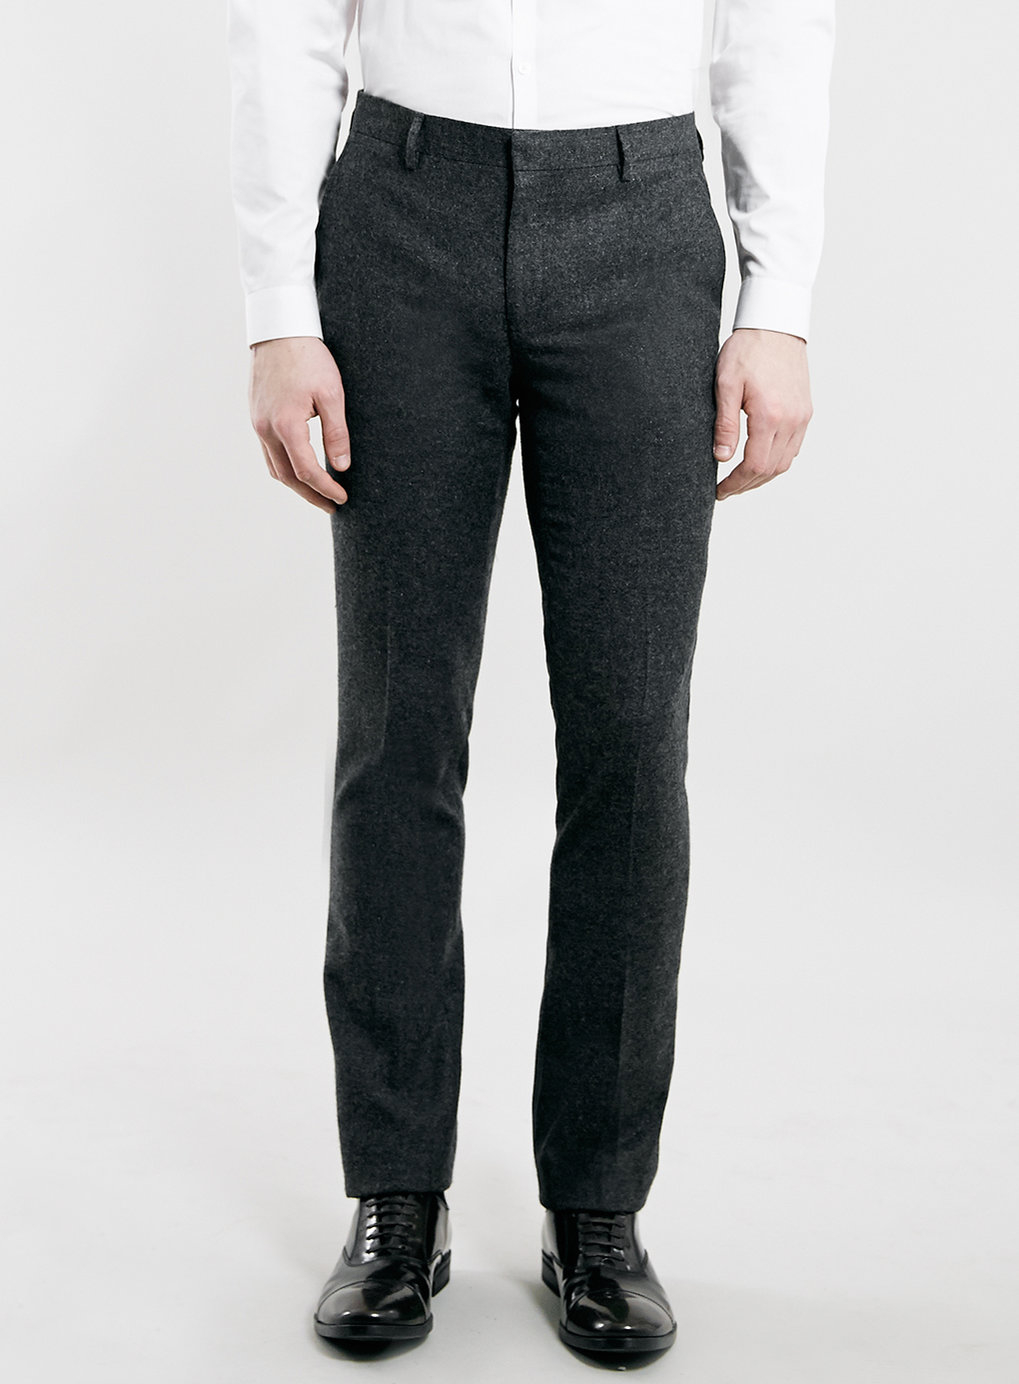 Lyst - Topman Dark Grey Textured Skinny Fit Suit Trousers in Gray for Men